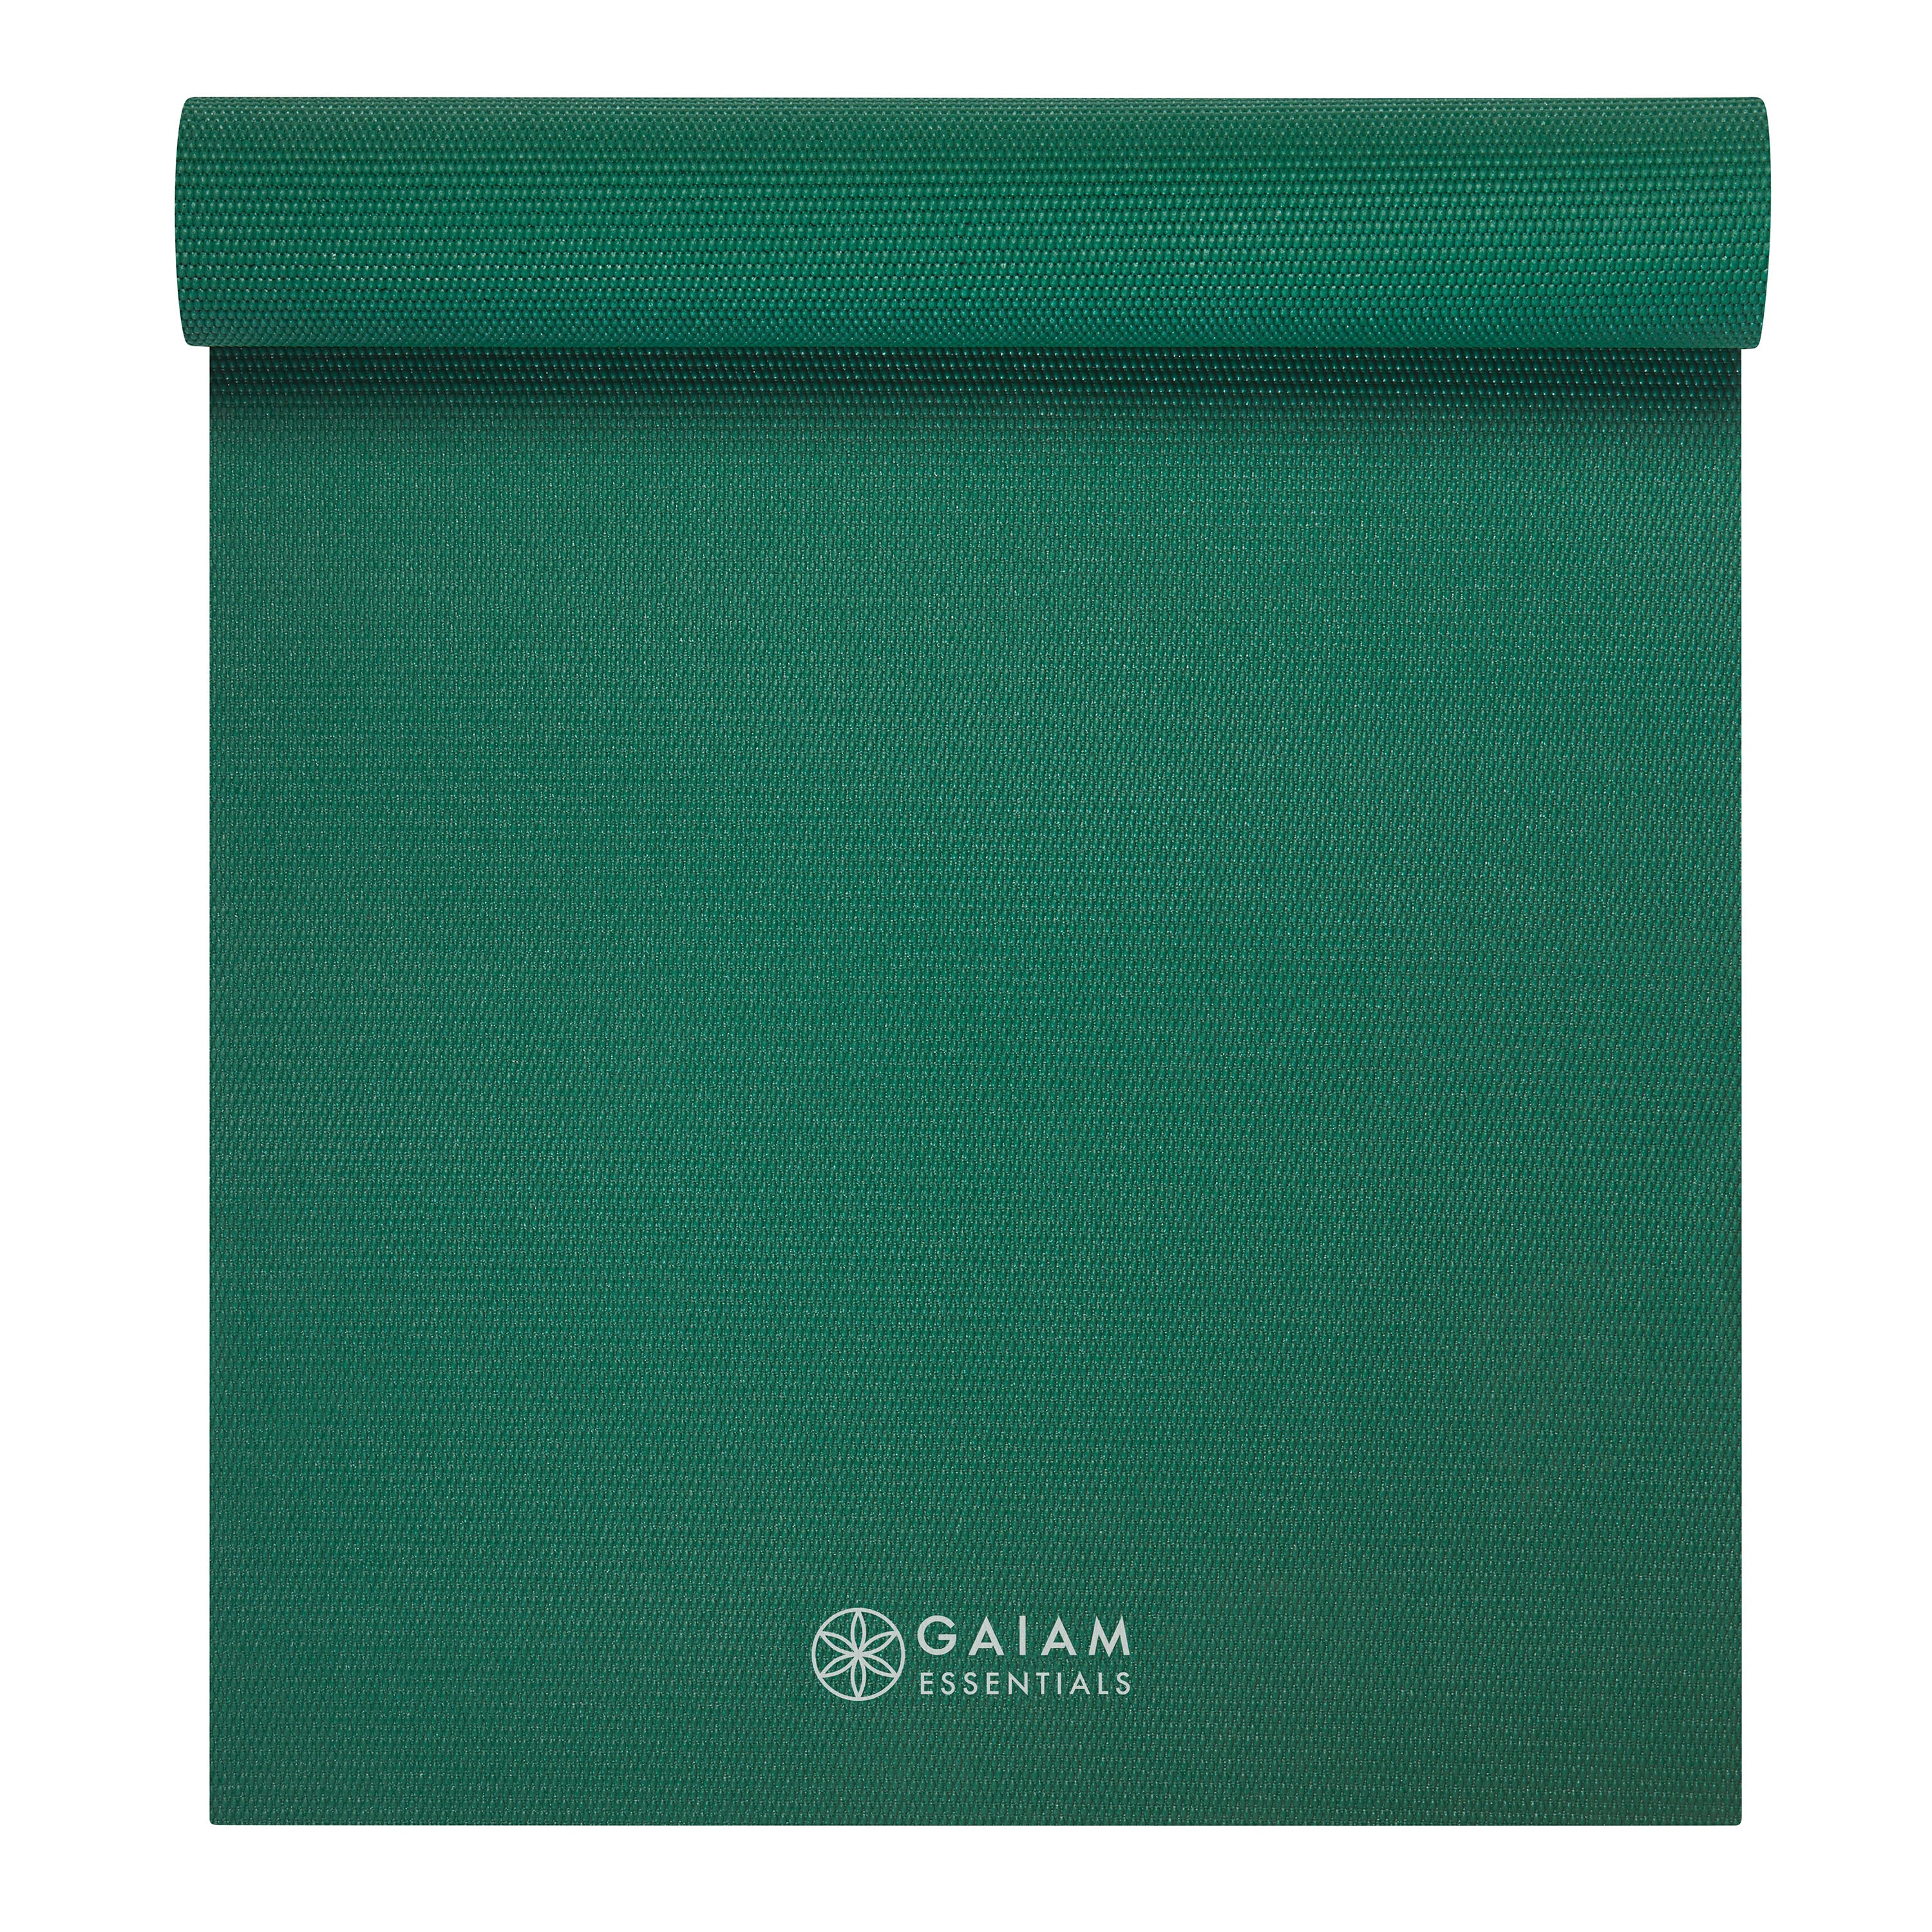 Gaiam Essentials Yoga Mat Green top rolled